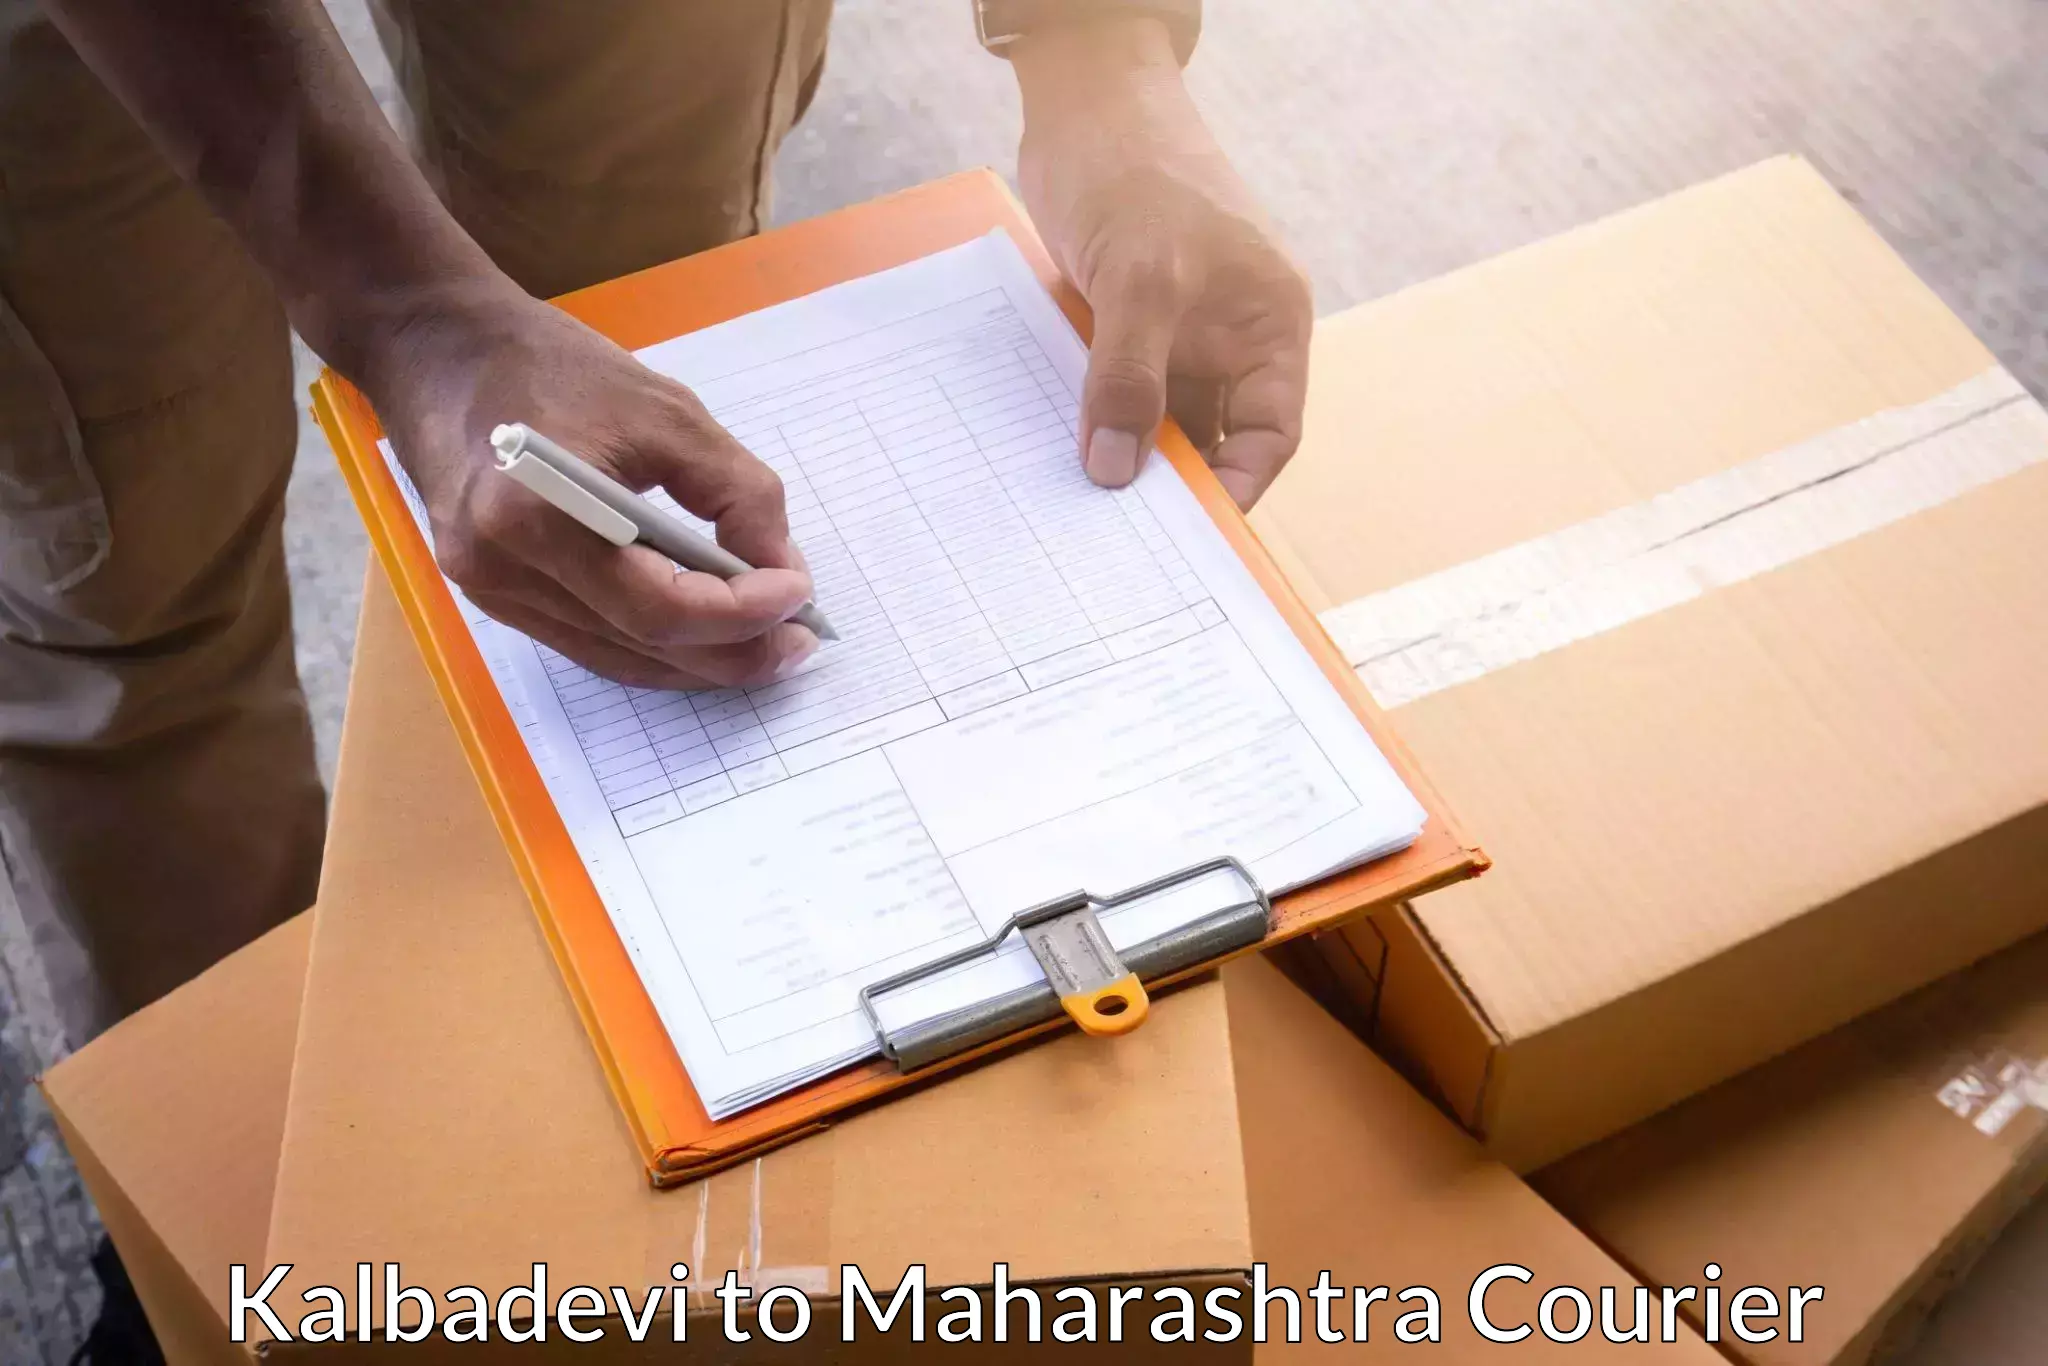 Courier service efficiency Kalbadevi to Ballarpur